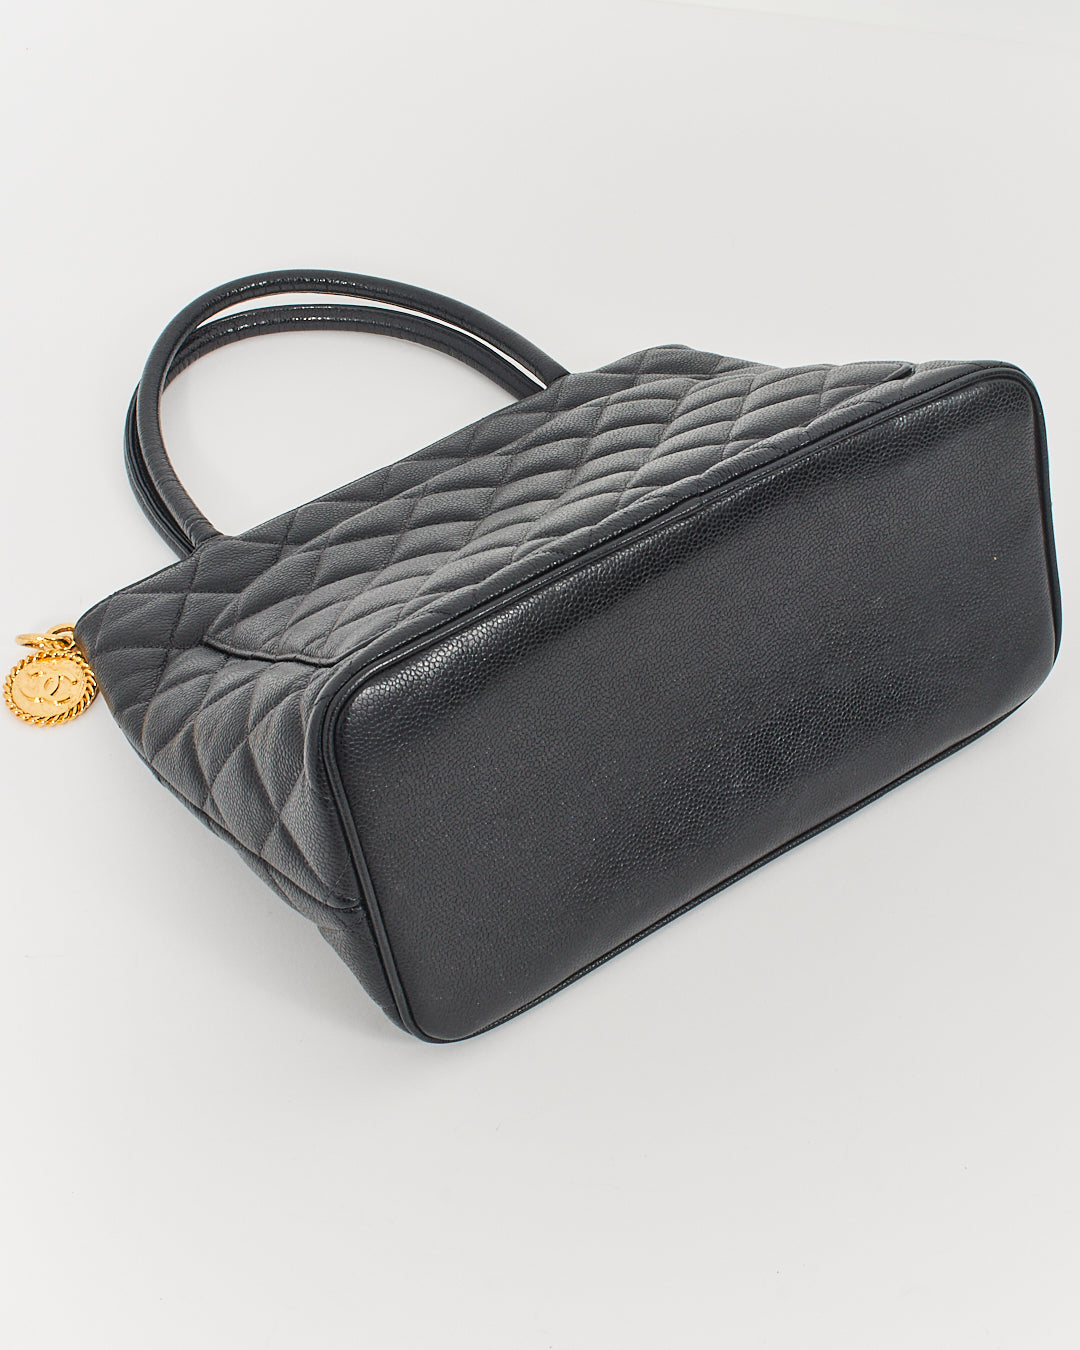 Chanel Black Caviar Leather Medallion Top Handle Bag